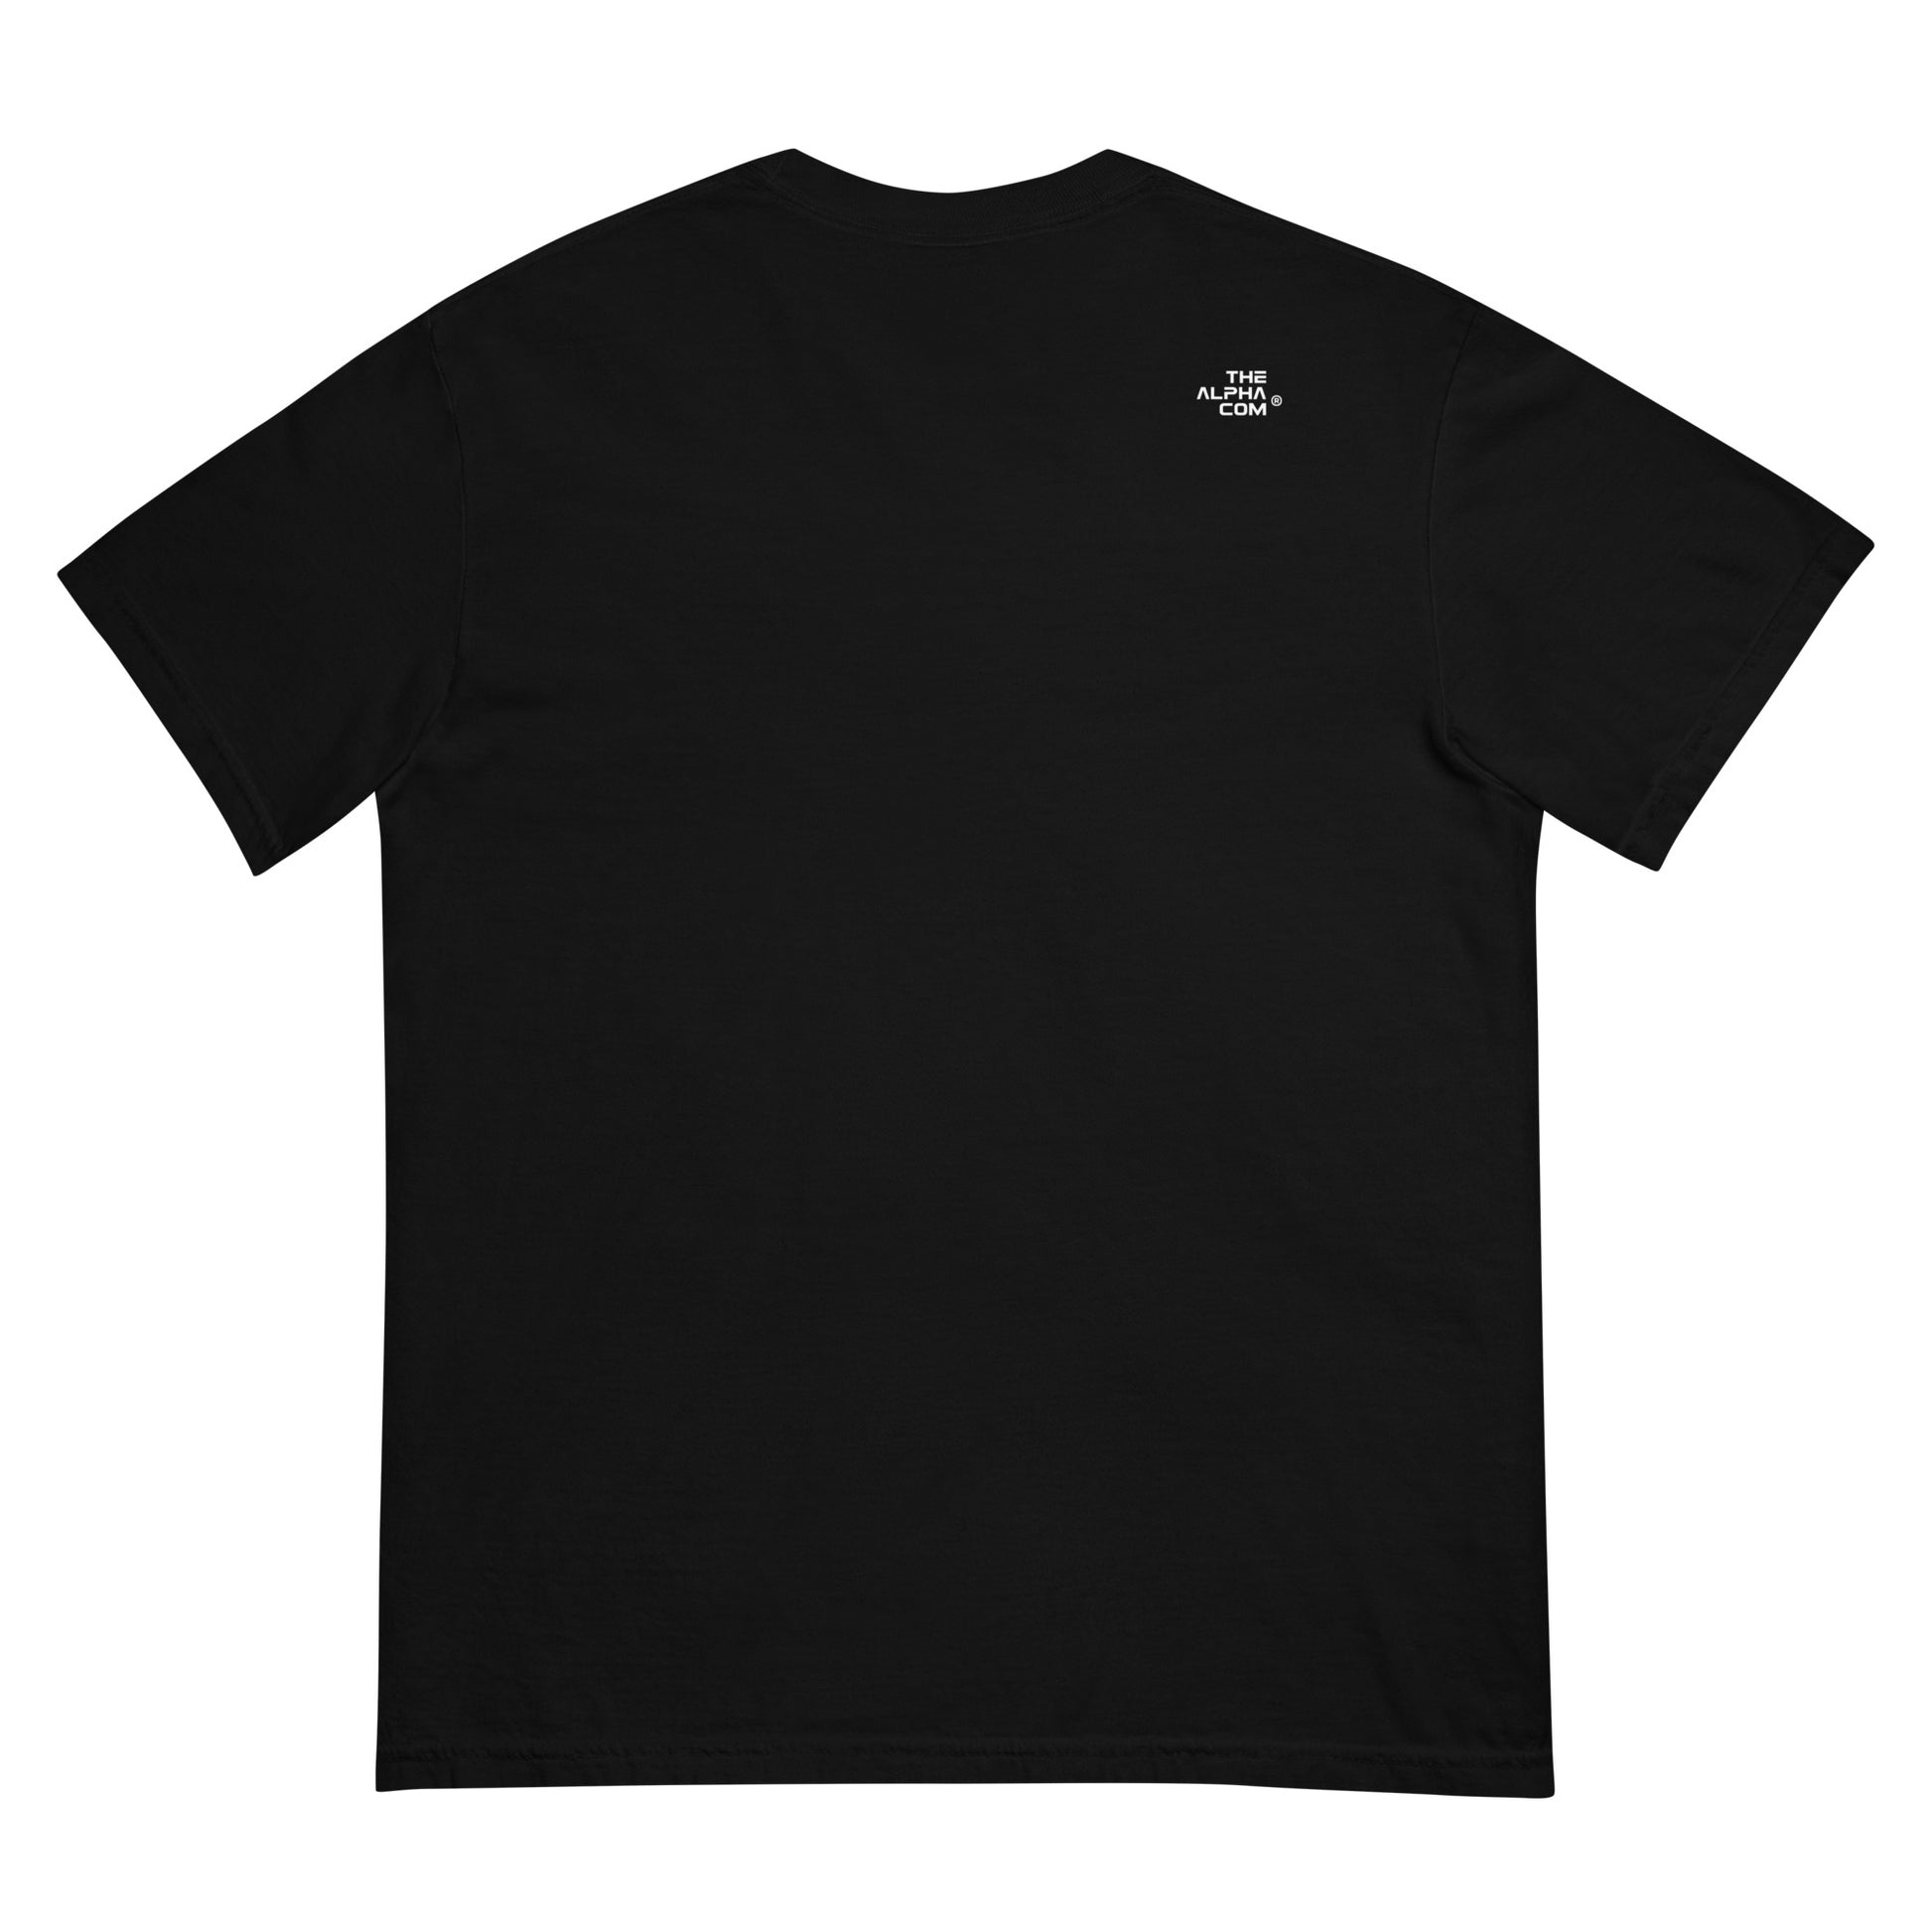 THE ALPHA COM ® ADB Unisex garment-dyed heavyweight t-shirt - THE ALPHA